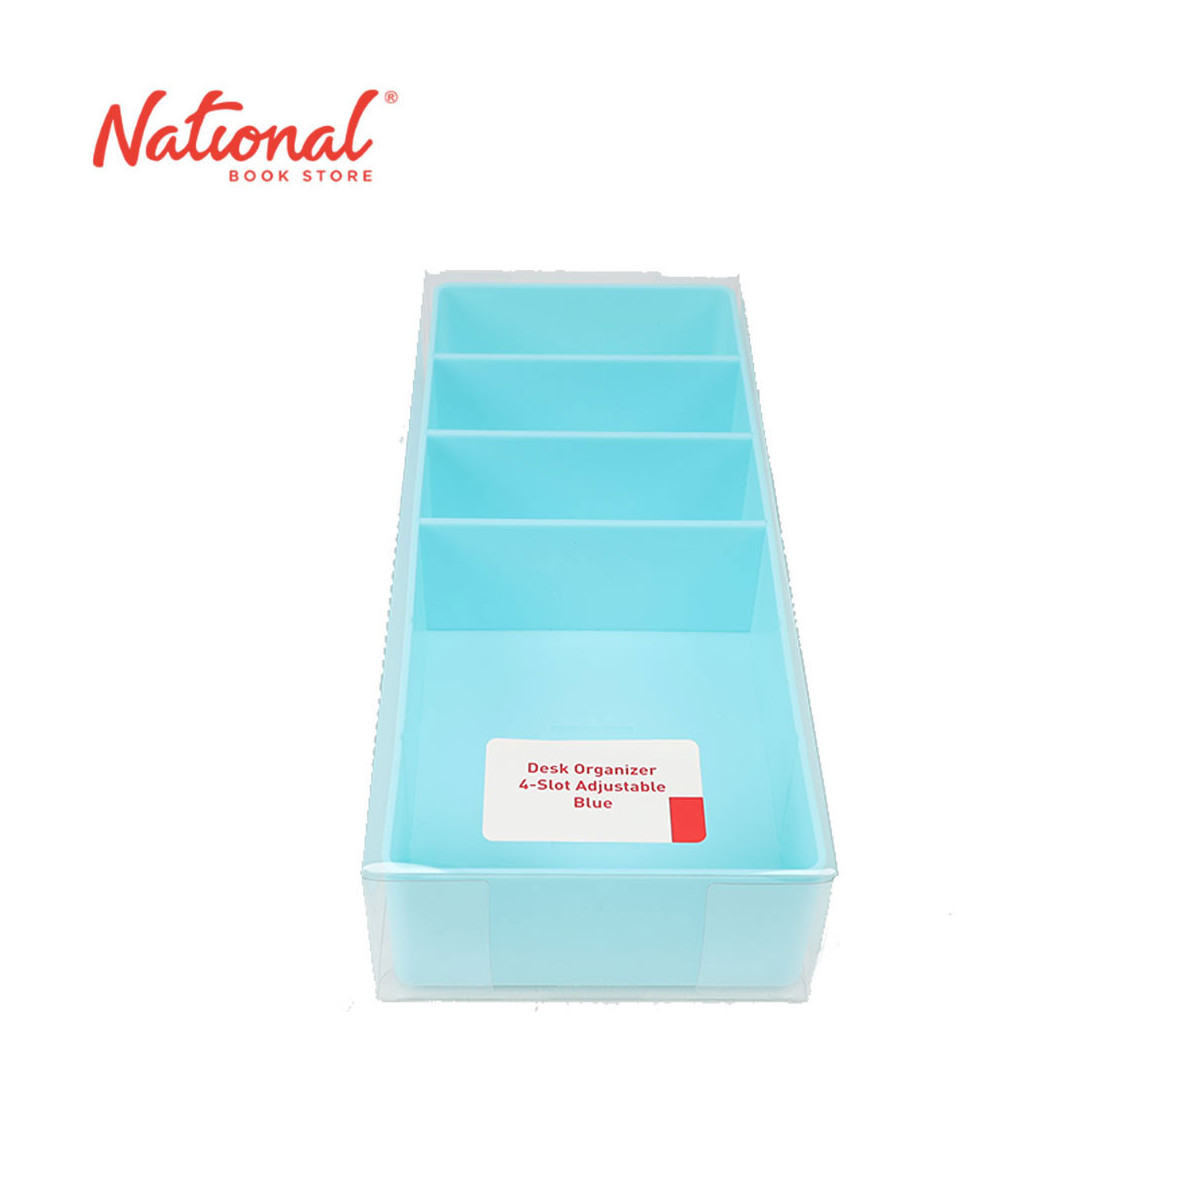 NB Looking Desk Organizer NC20T019 Blue 4-Slot Adjustable - Office Supplies